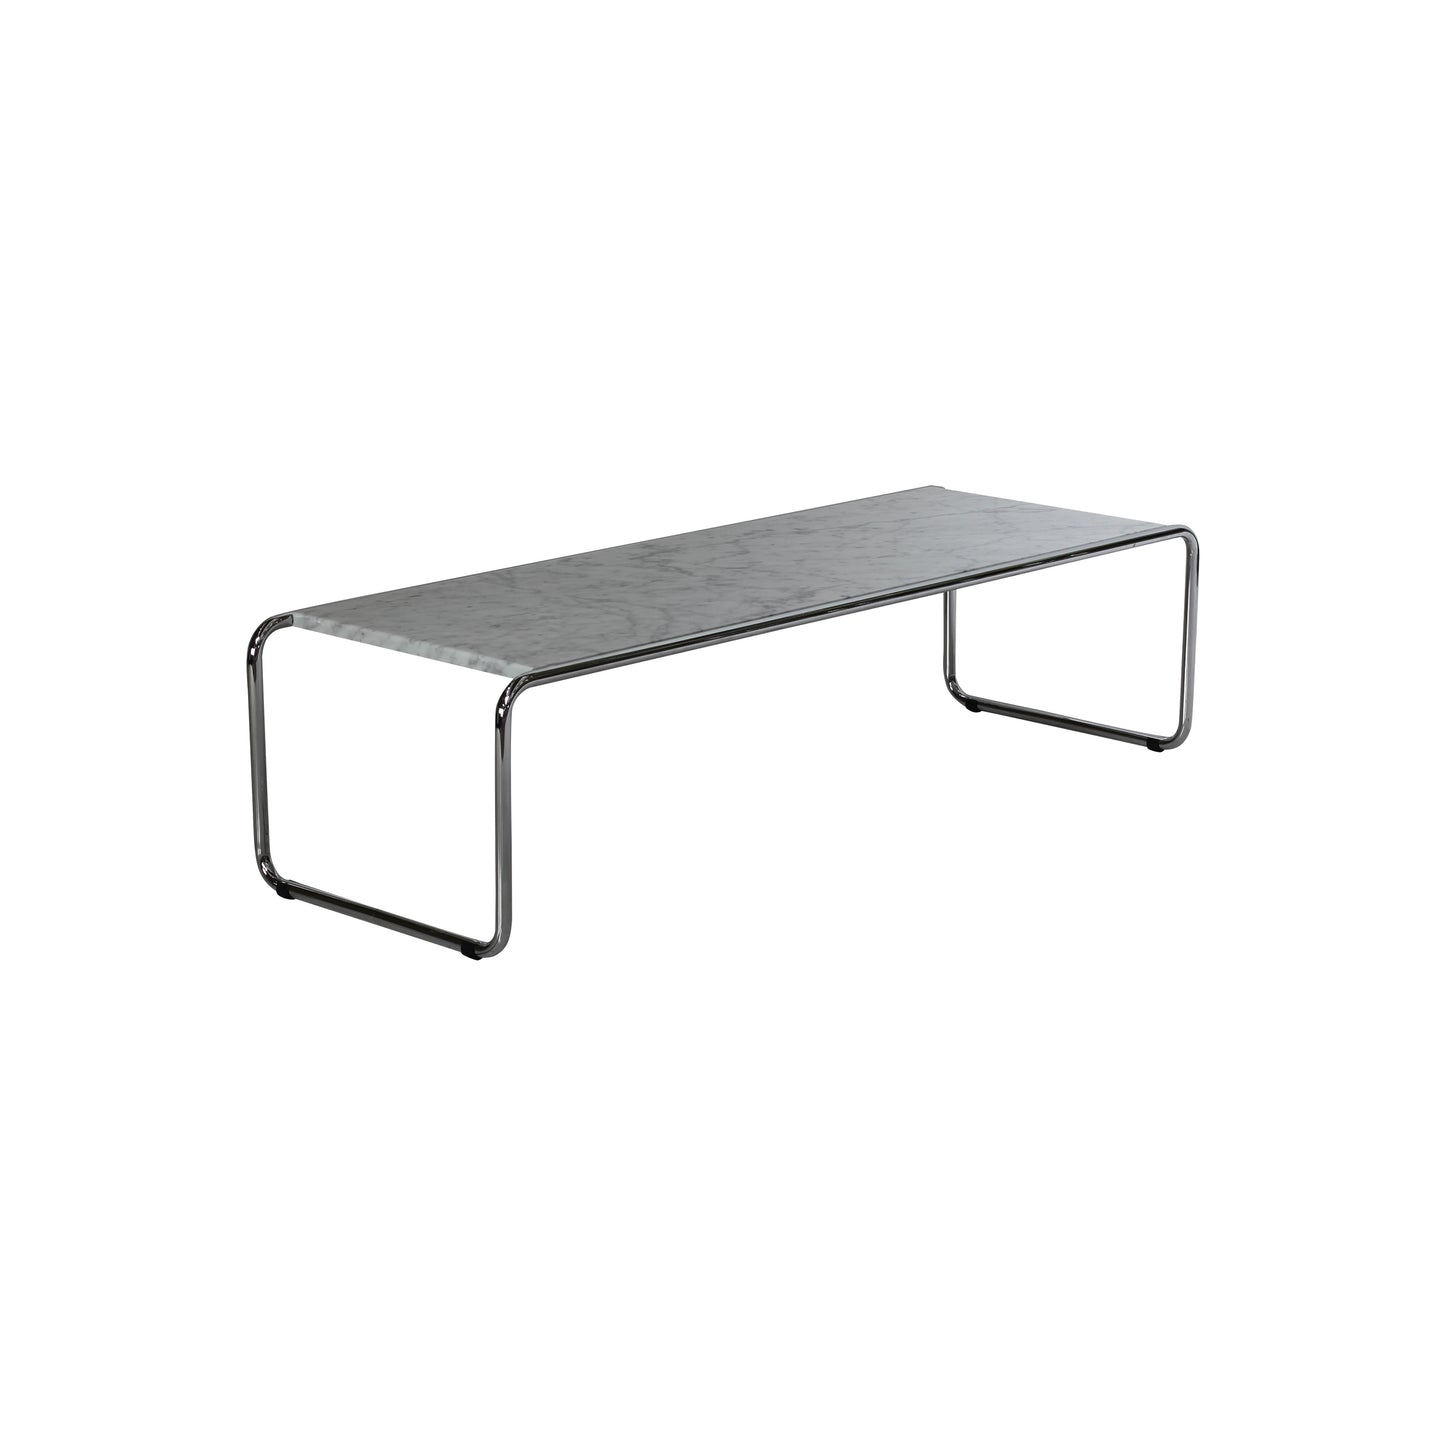 Laccio coffee table style | Carrara | Side